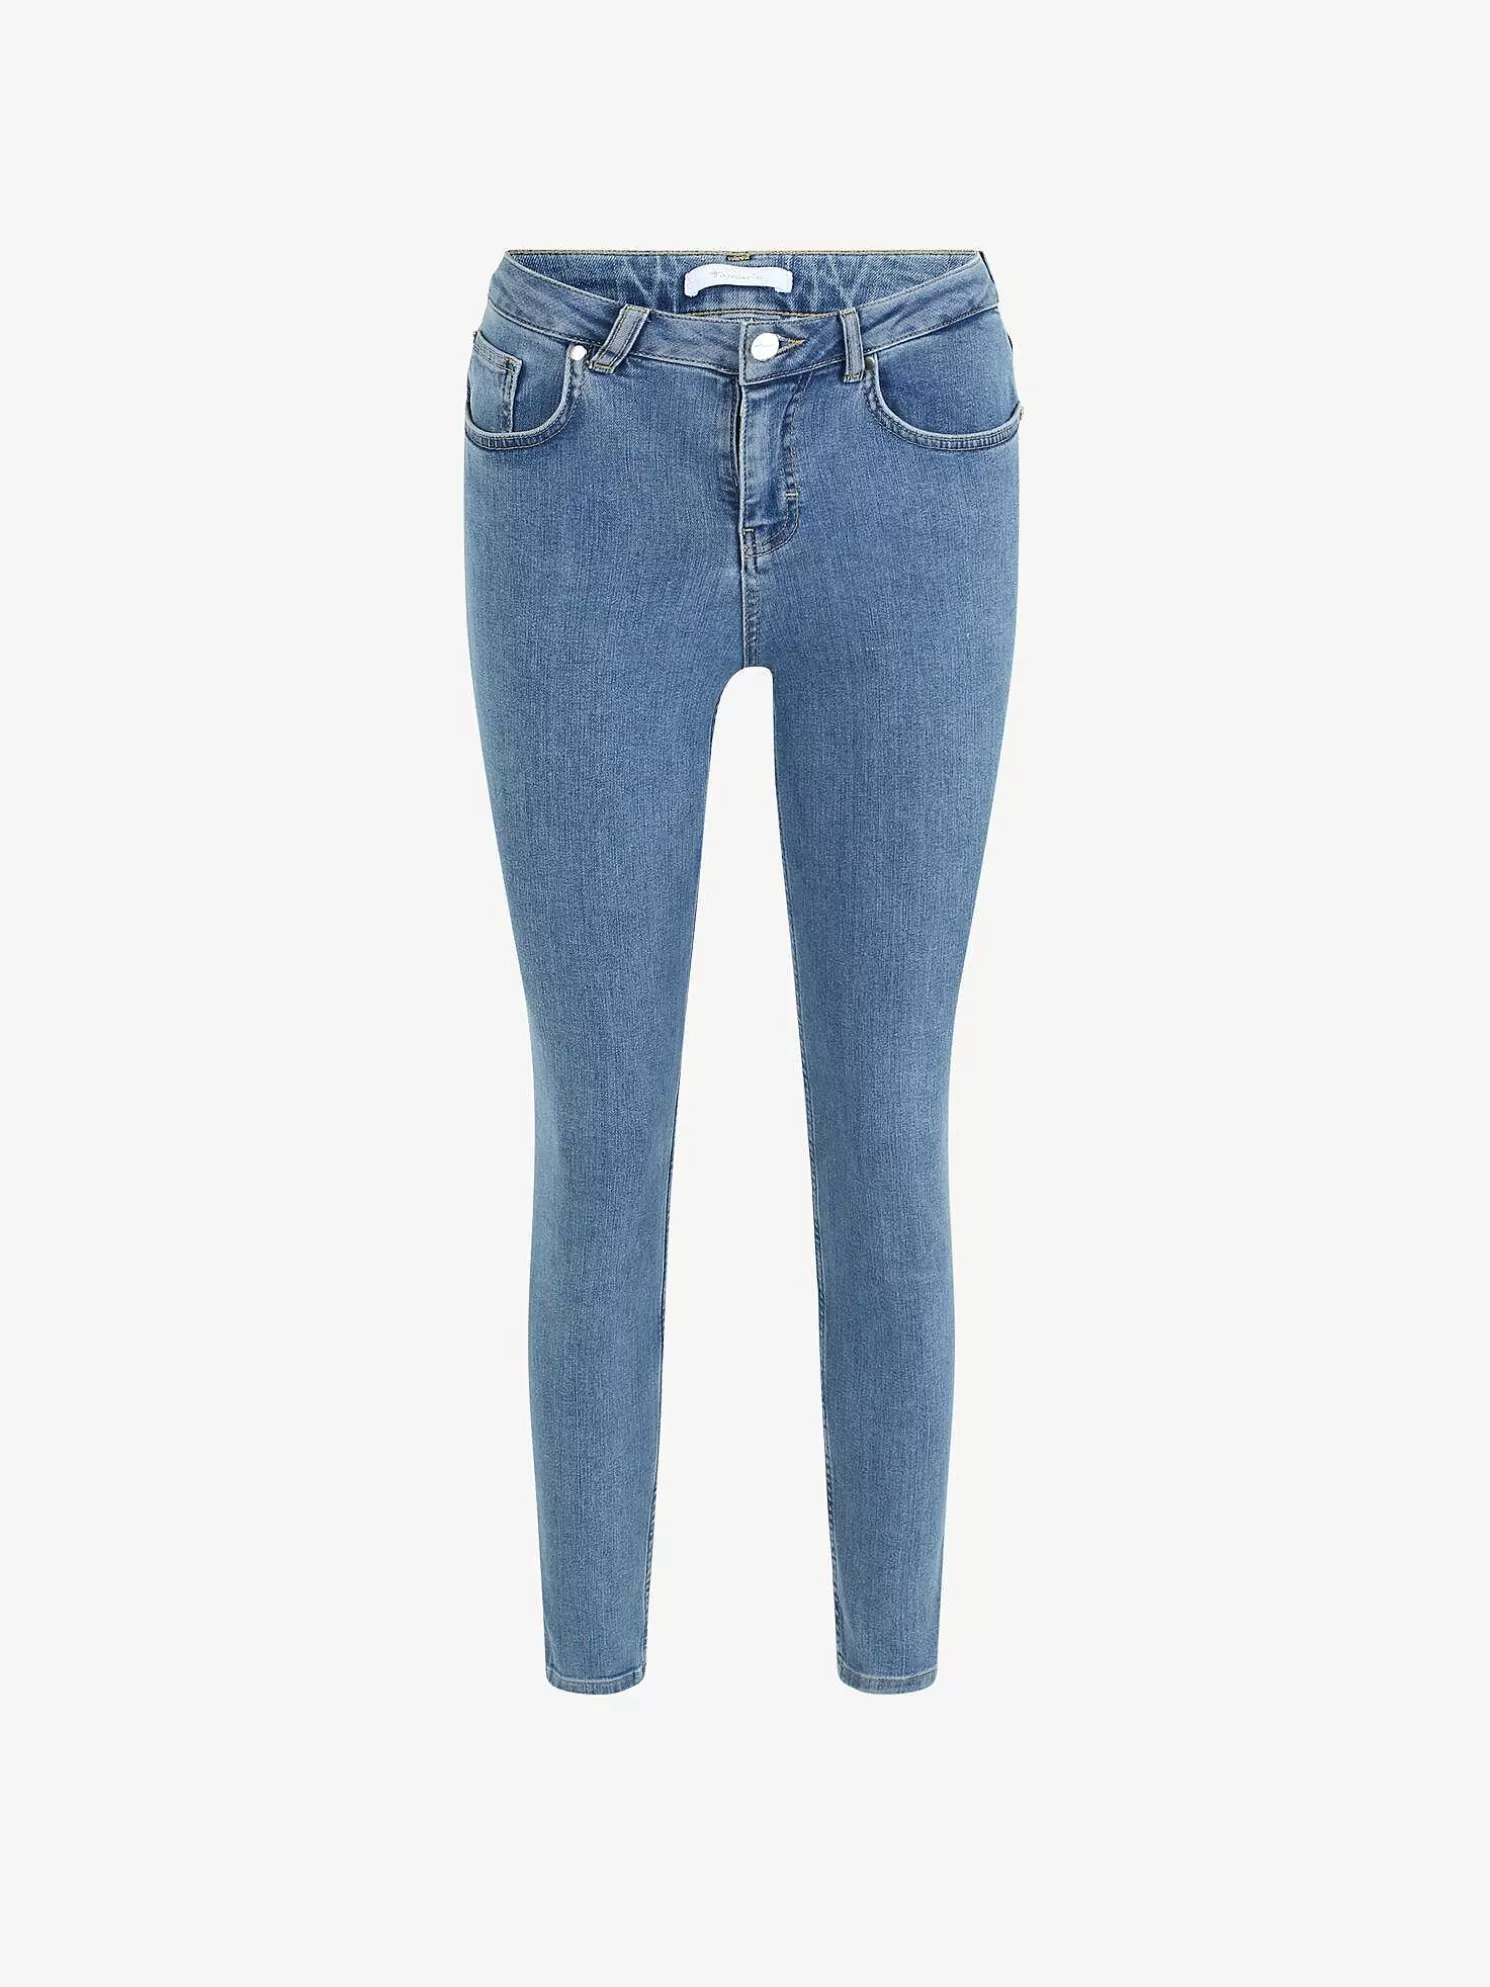 Jeans - Blau*Tamaris Fashion